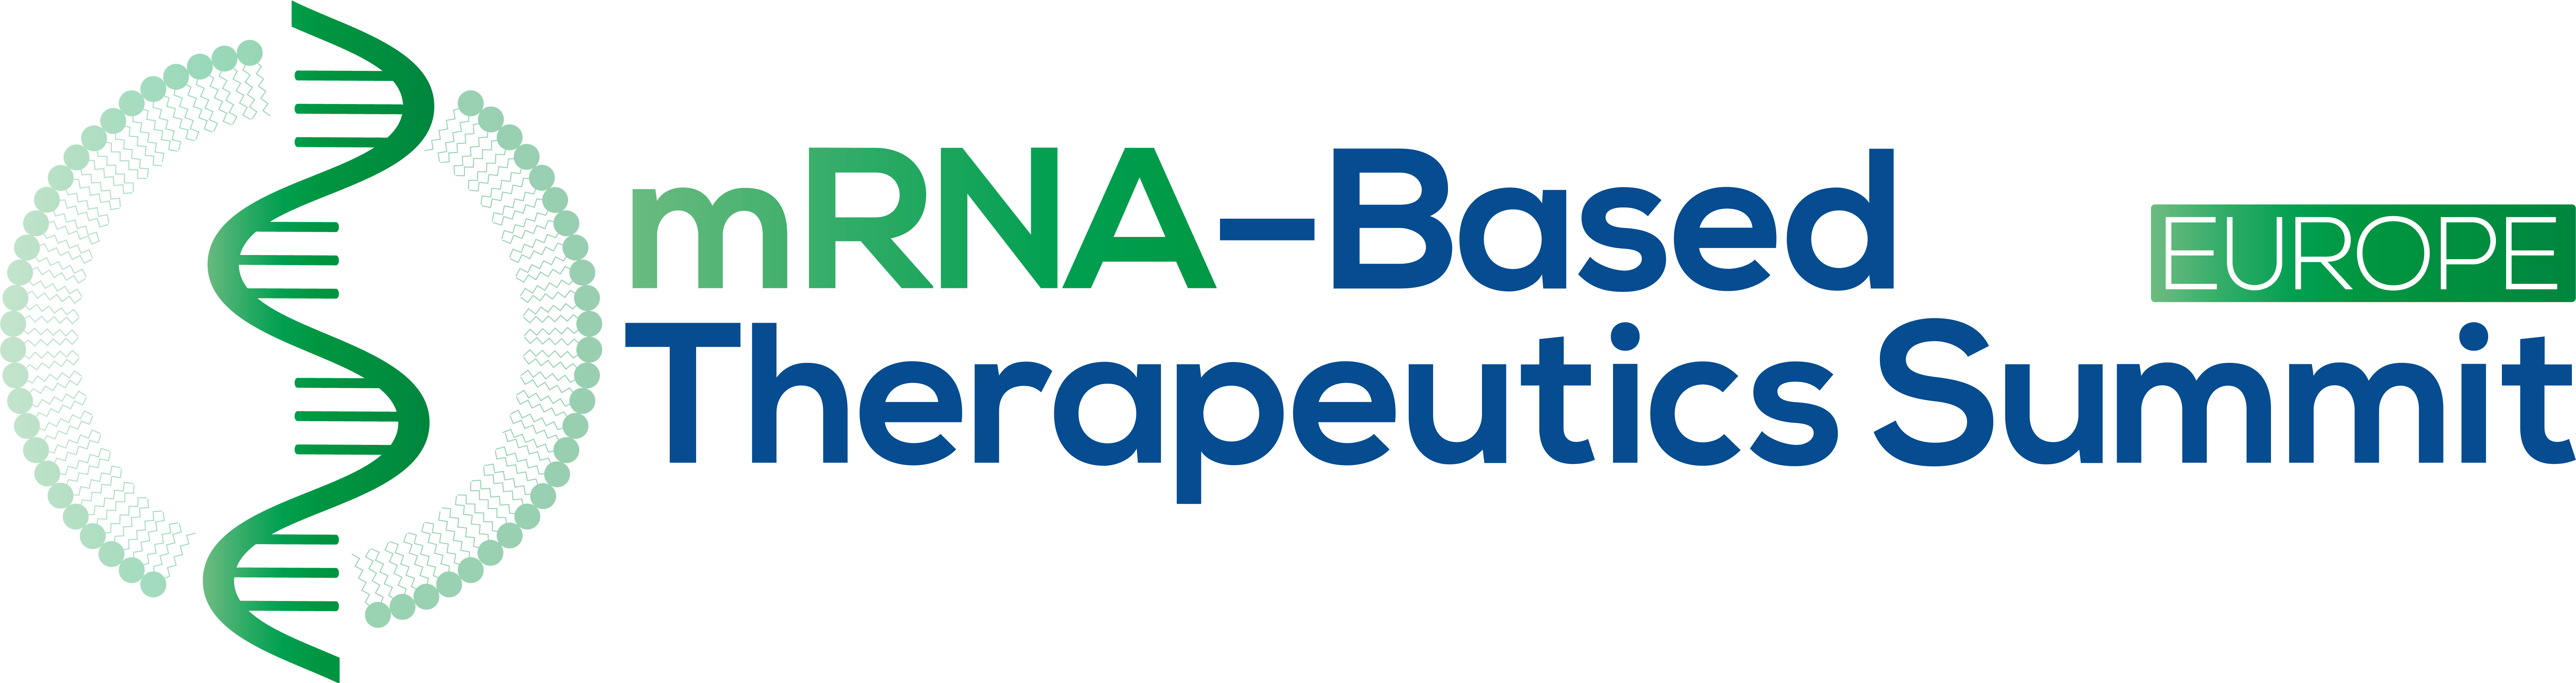 mRNA Based Therapeutics Summit Europe logo